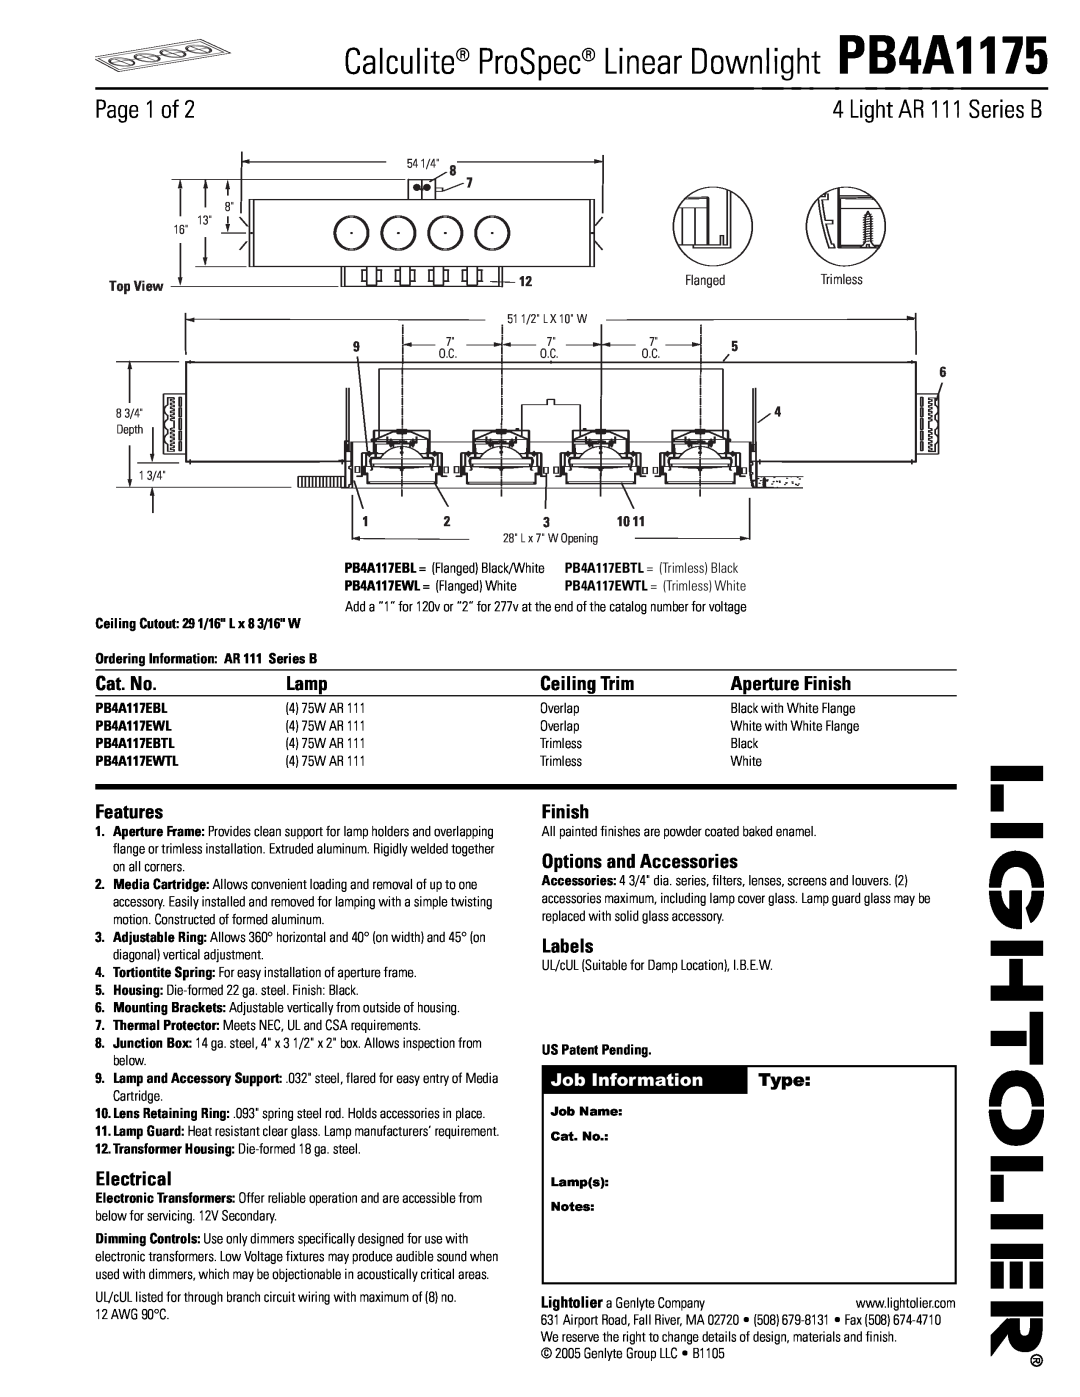 Lightolier manual Calculite ProSpec Linear Downlight PB4A1175, Page 1 of, Light AR 111 Series B, Cat. No, Lamp, Finish 